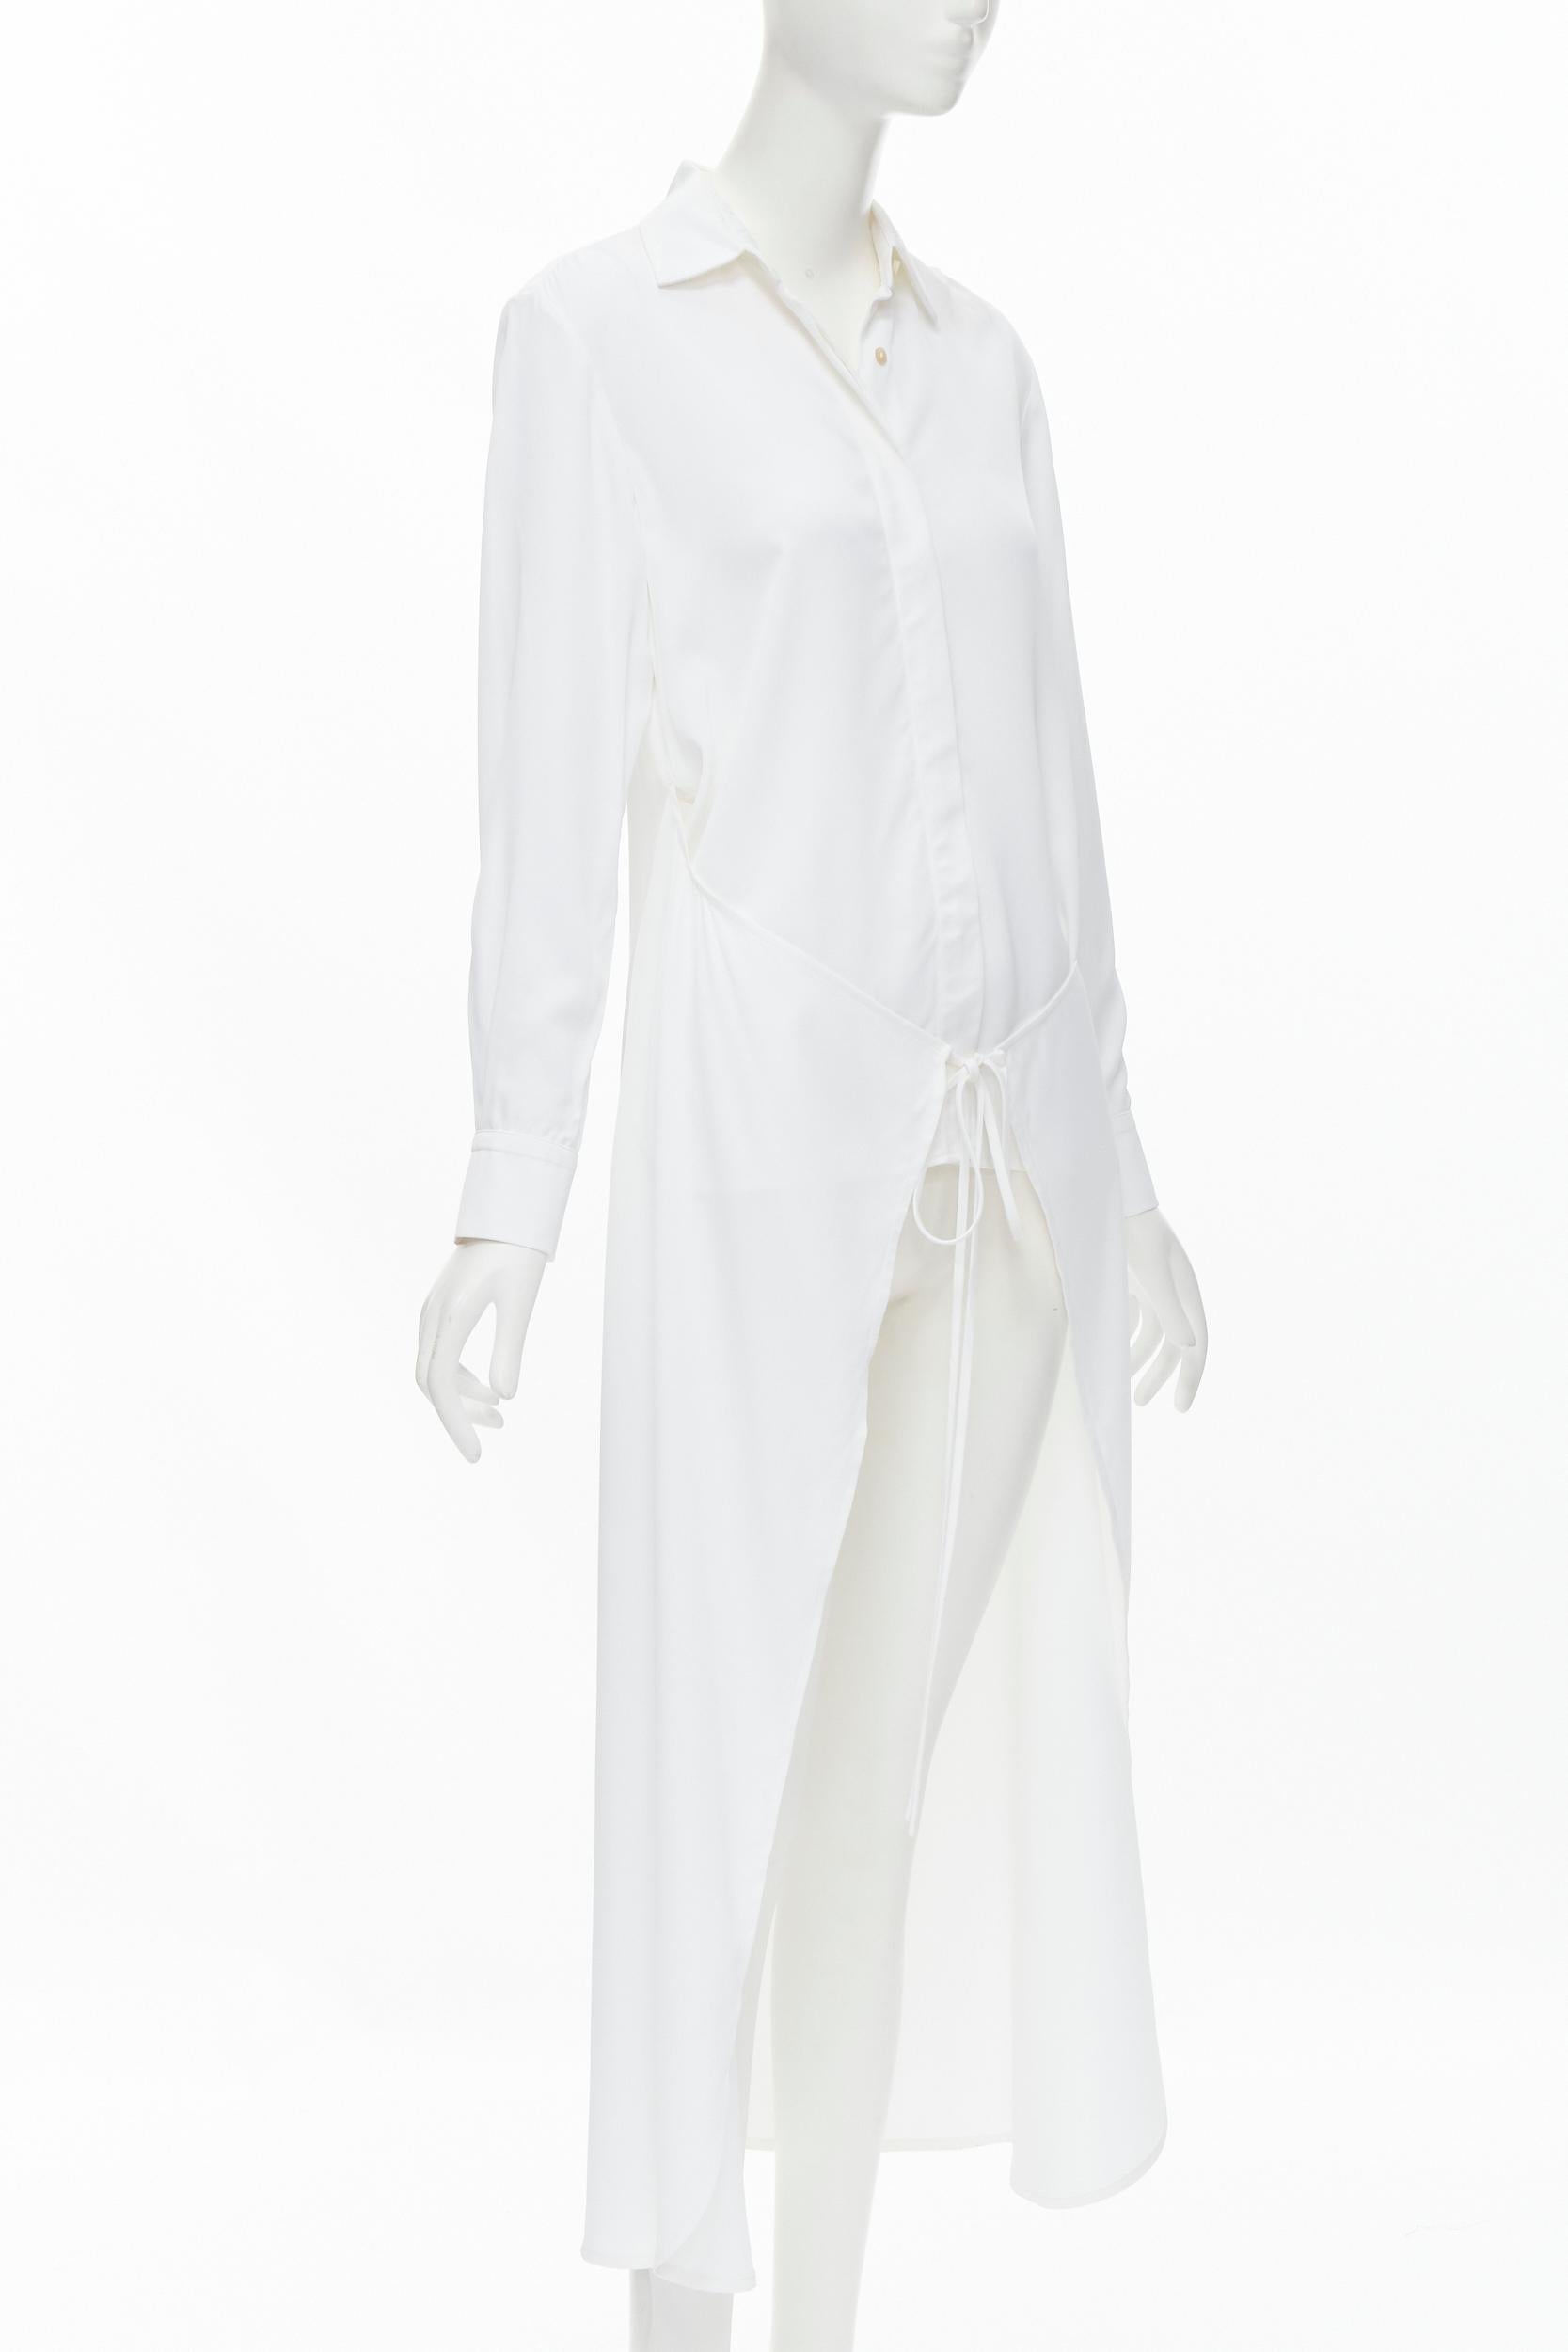 Gray ROSETTA GETTY white viscose  long sleeve high low train hem shirt top US2 XS For Sale